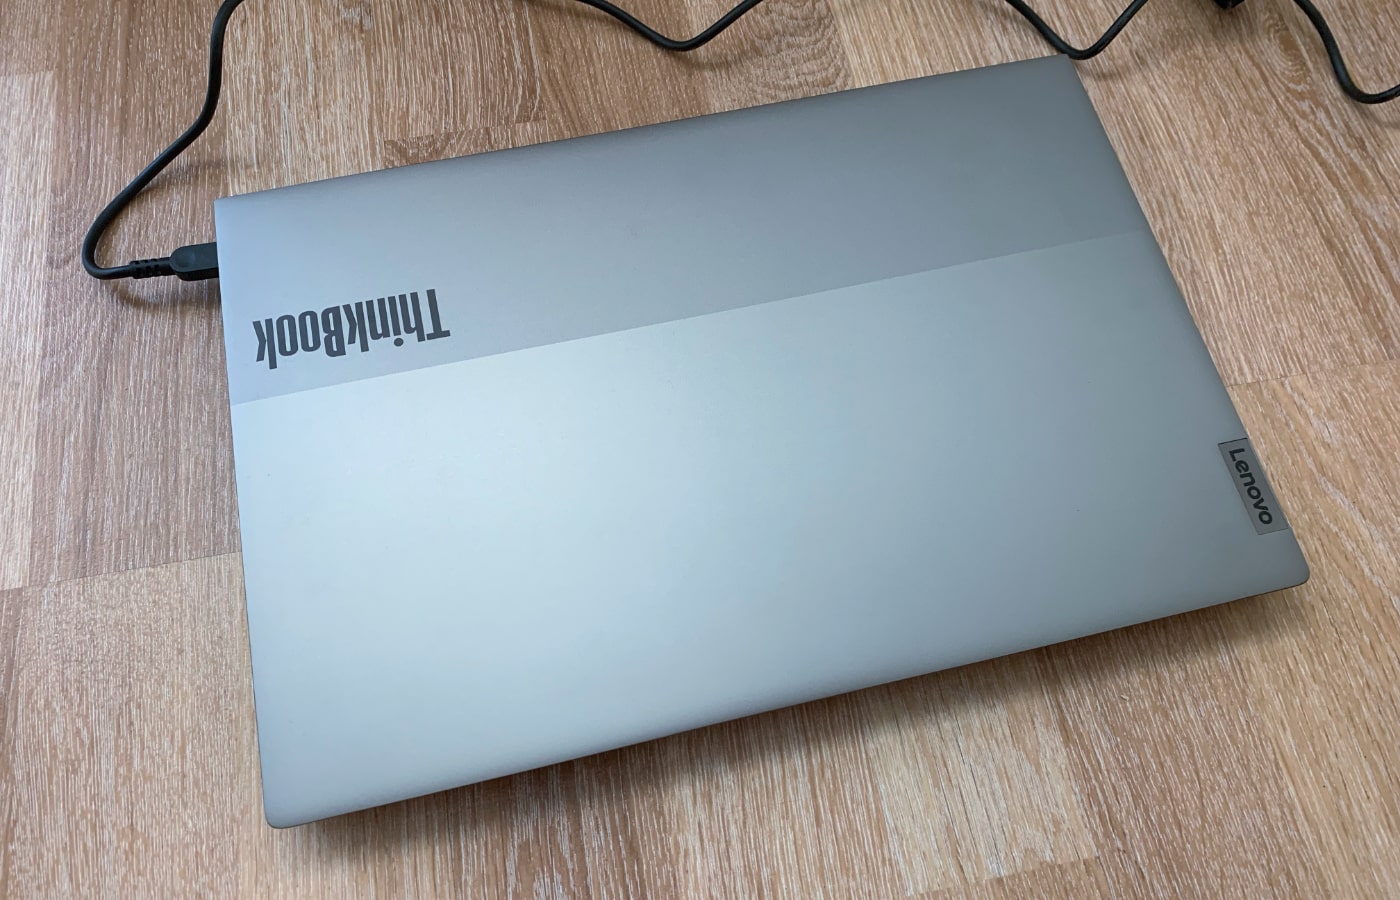 Ноутбук Lenovo ThinkBook 14 G2 ITL